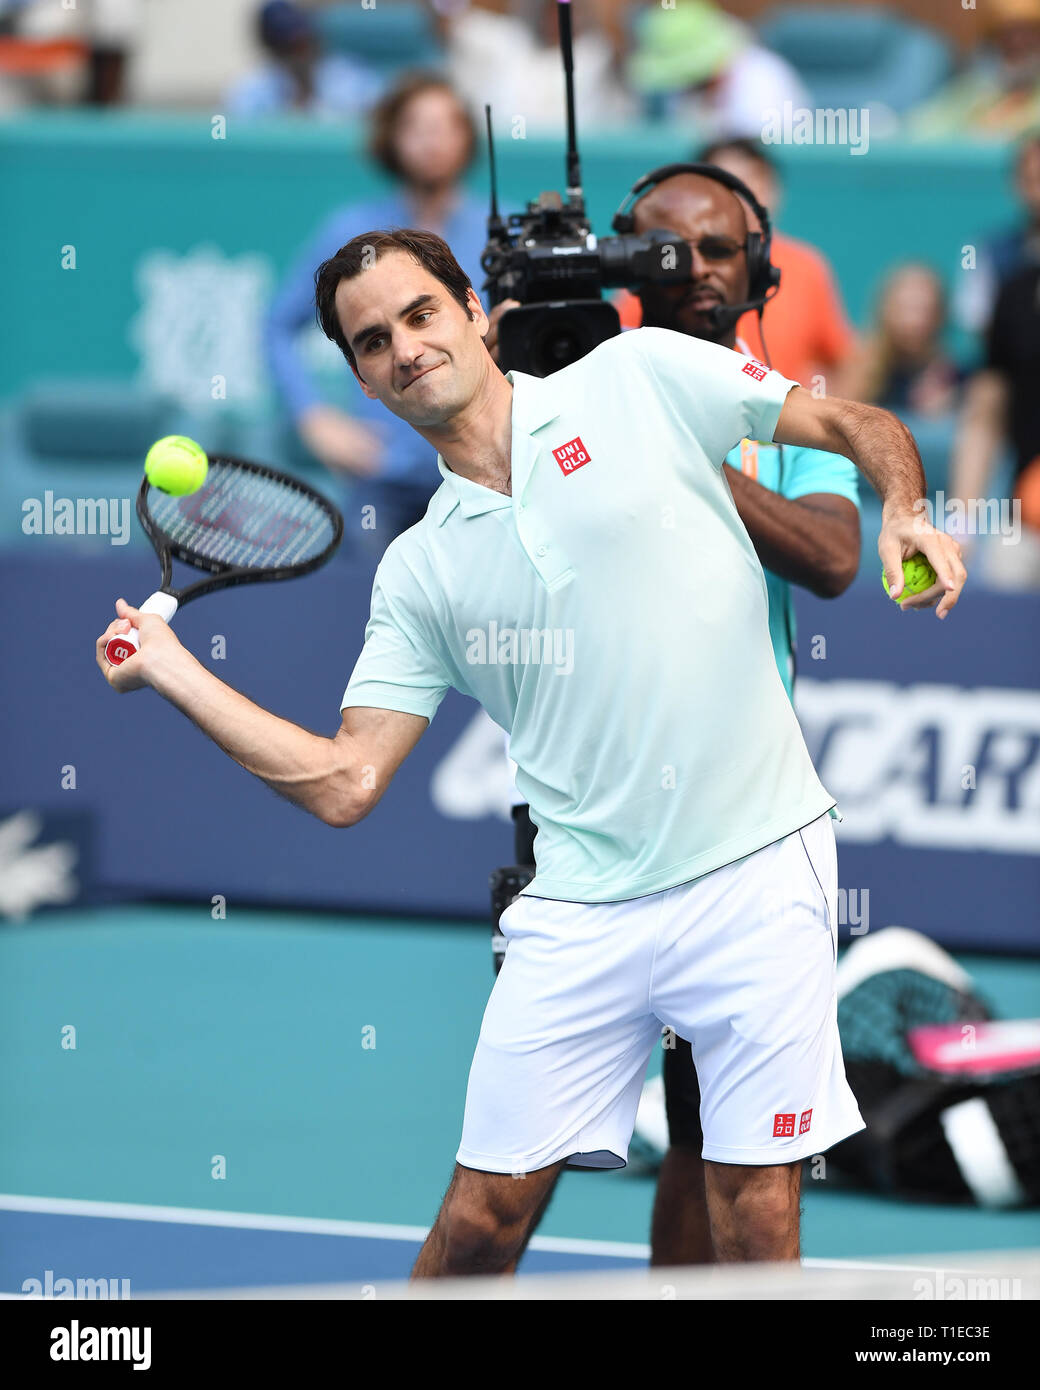 Miami Gardens FL, USA. 25th Mar, 2019. Roger Federer Vs Filip Krajinovic on  Stadium court during the Miami Open held at Hard Rock Stadium on March 25,  2019 in Miami Gardens, Florida.